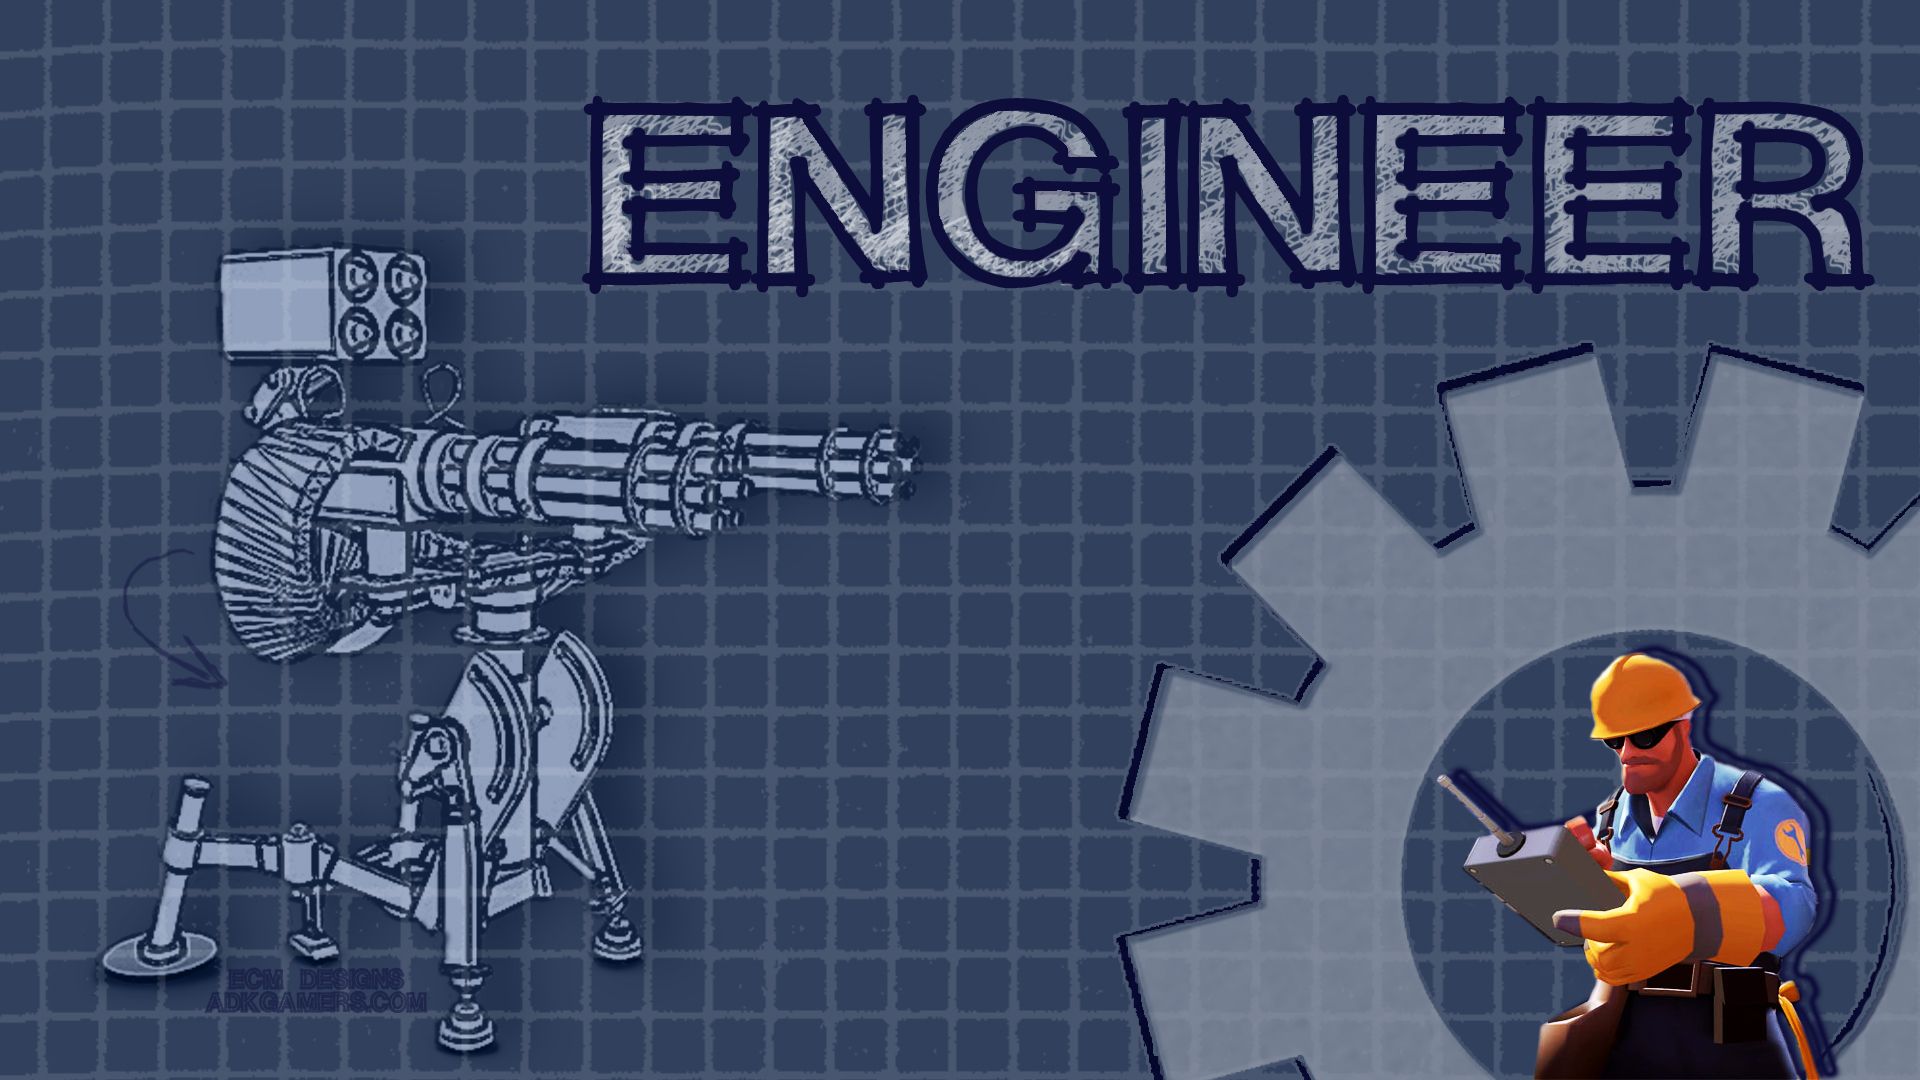 Engineer Background. Army Engineer Wallpaper, Engineer Wallpaper and Software Engineer Wallpaper